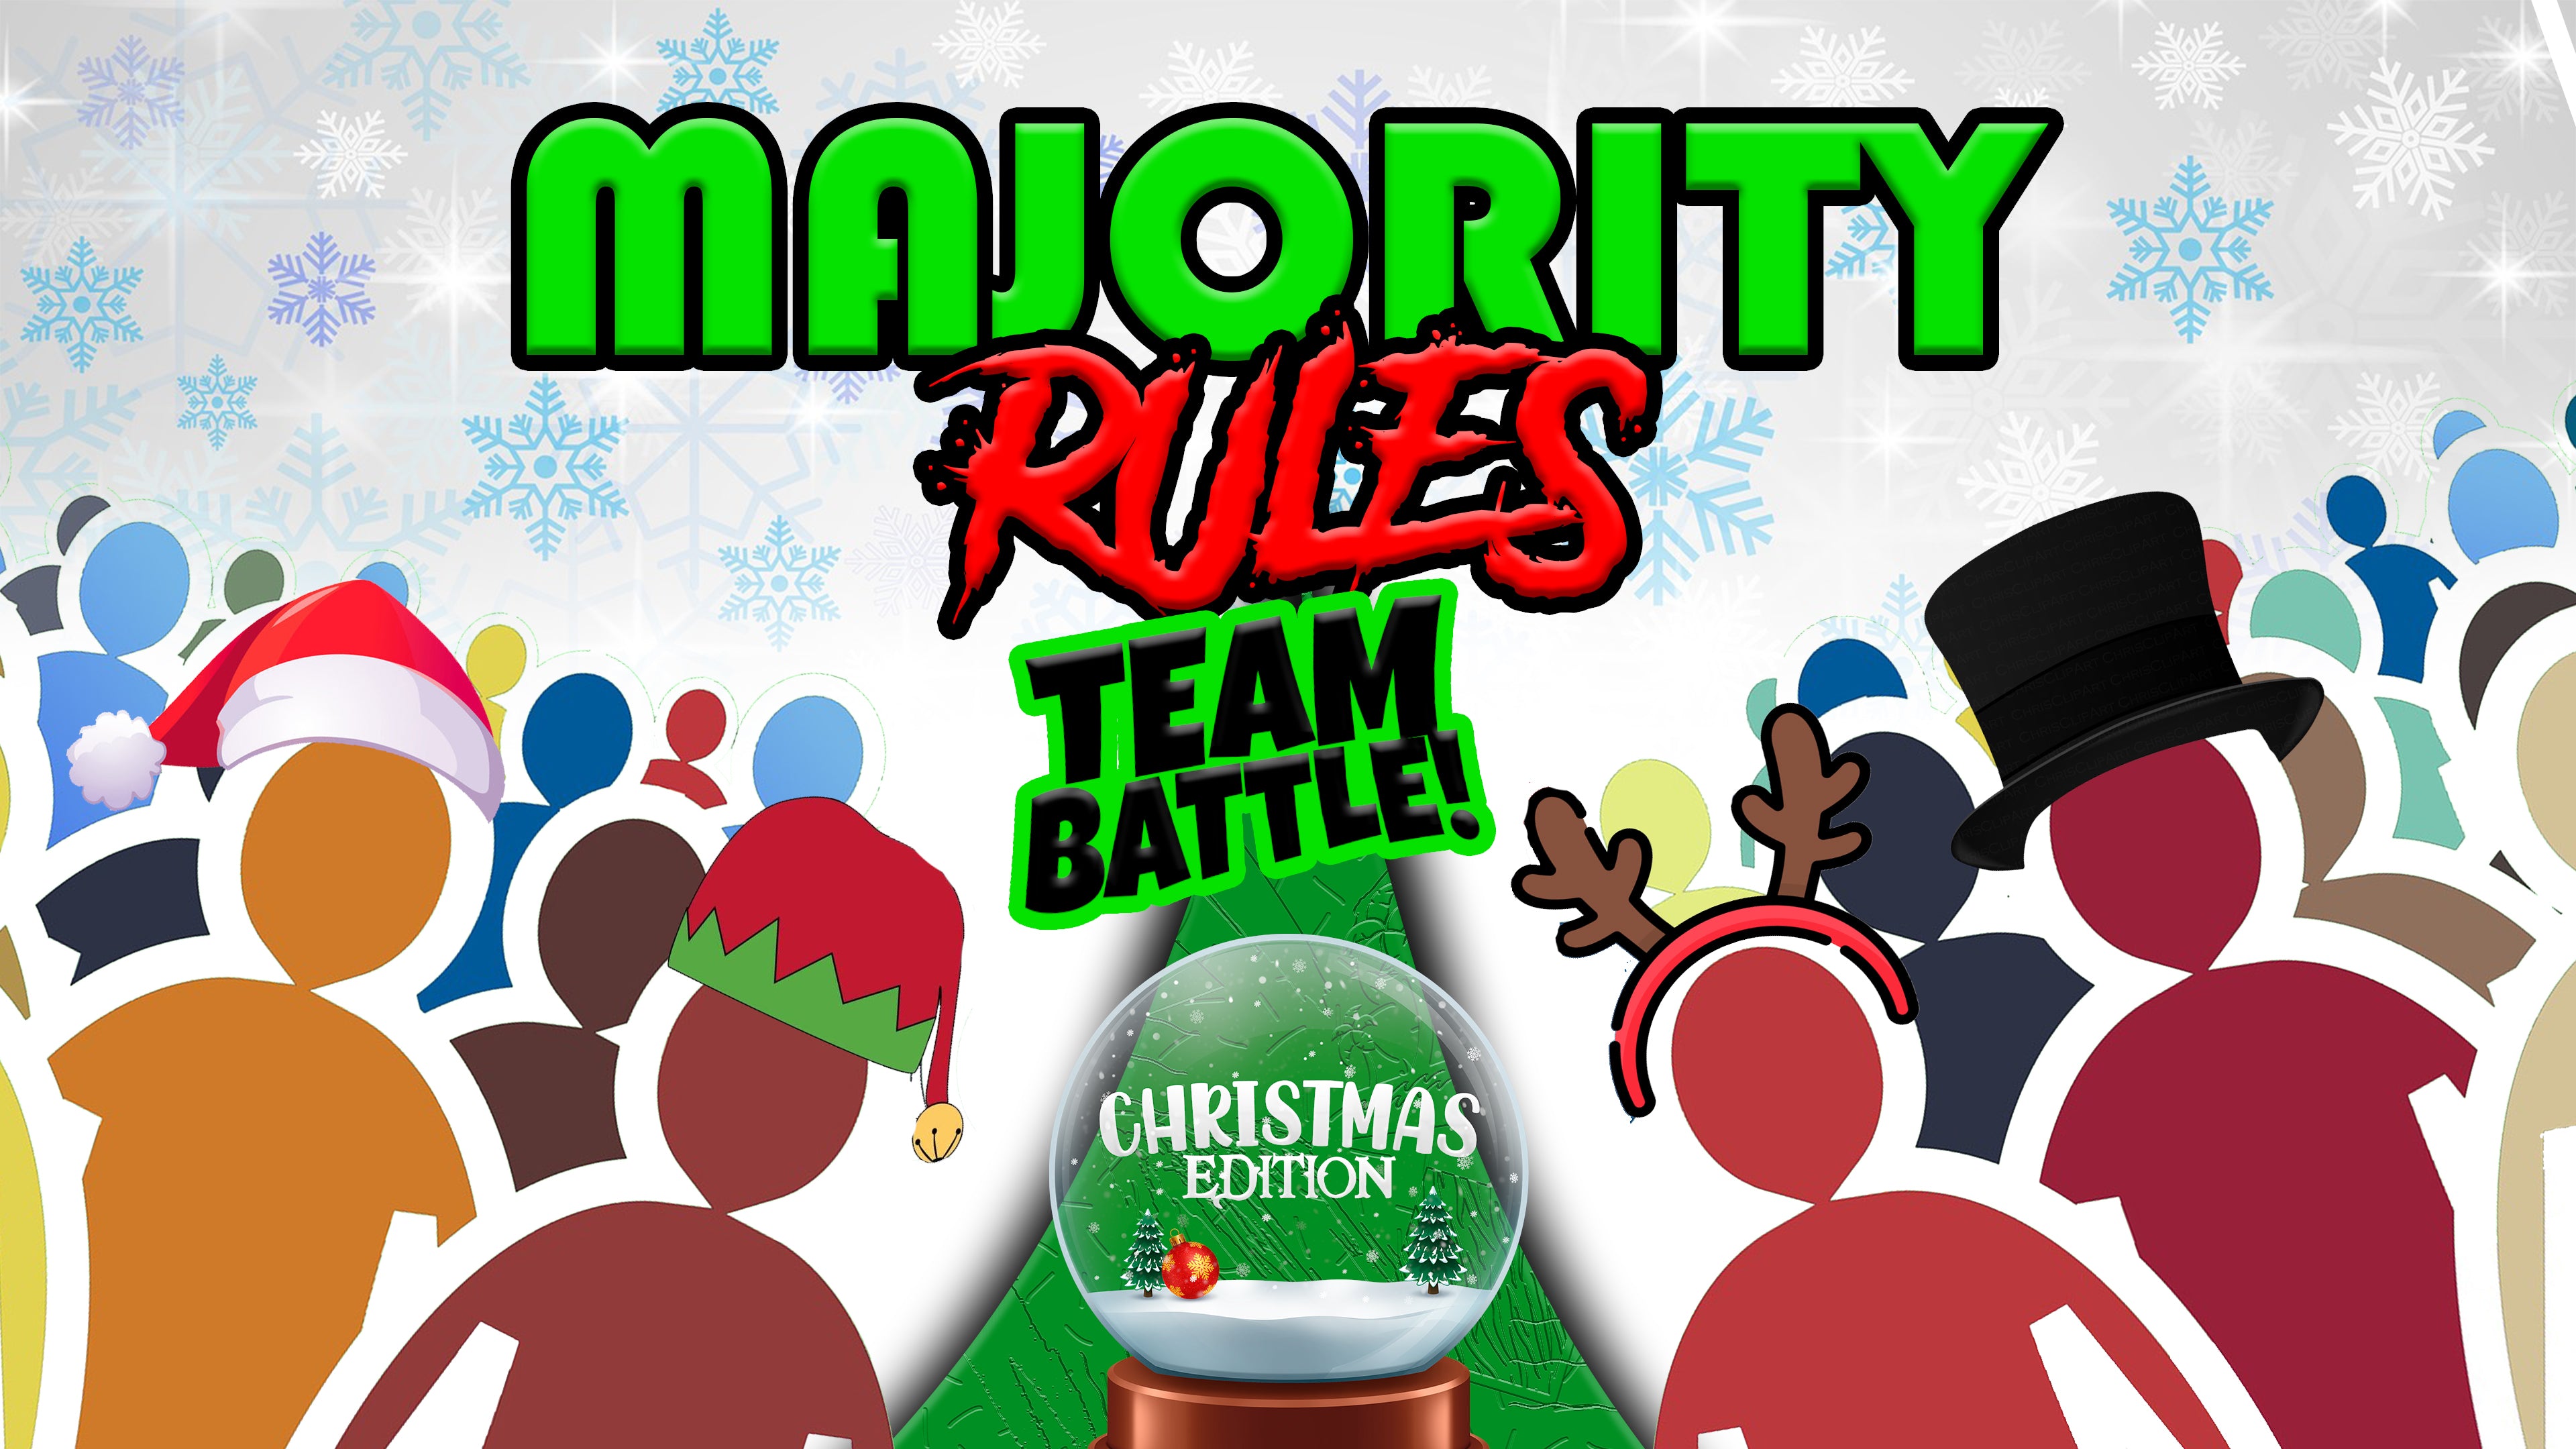 Majority Rules: Team Battle (Christmas Edition)